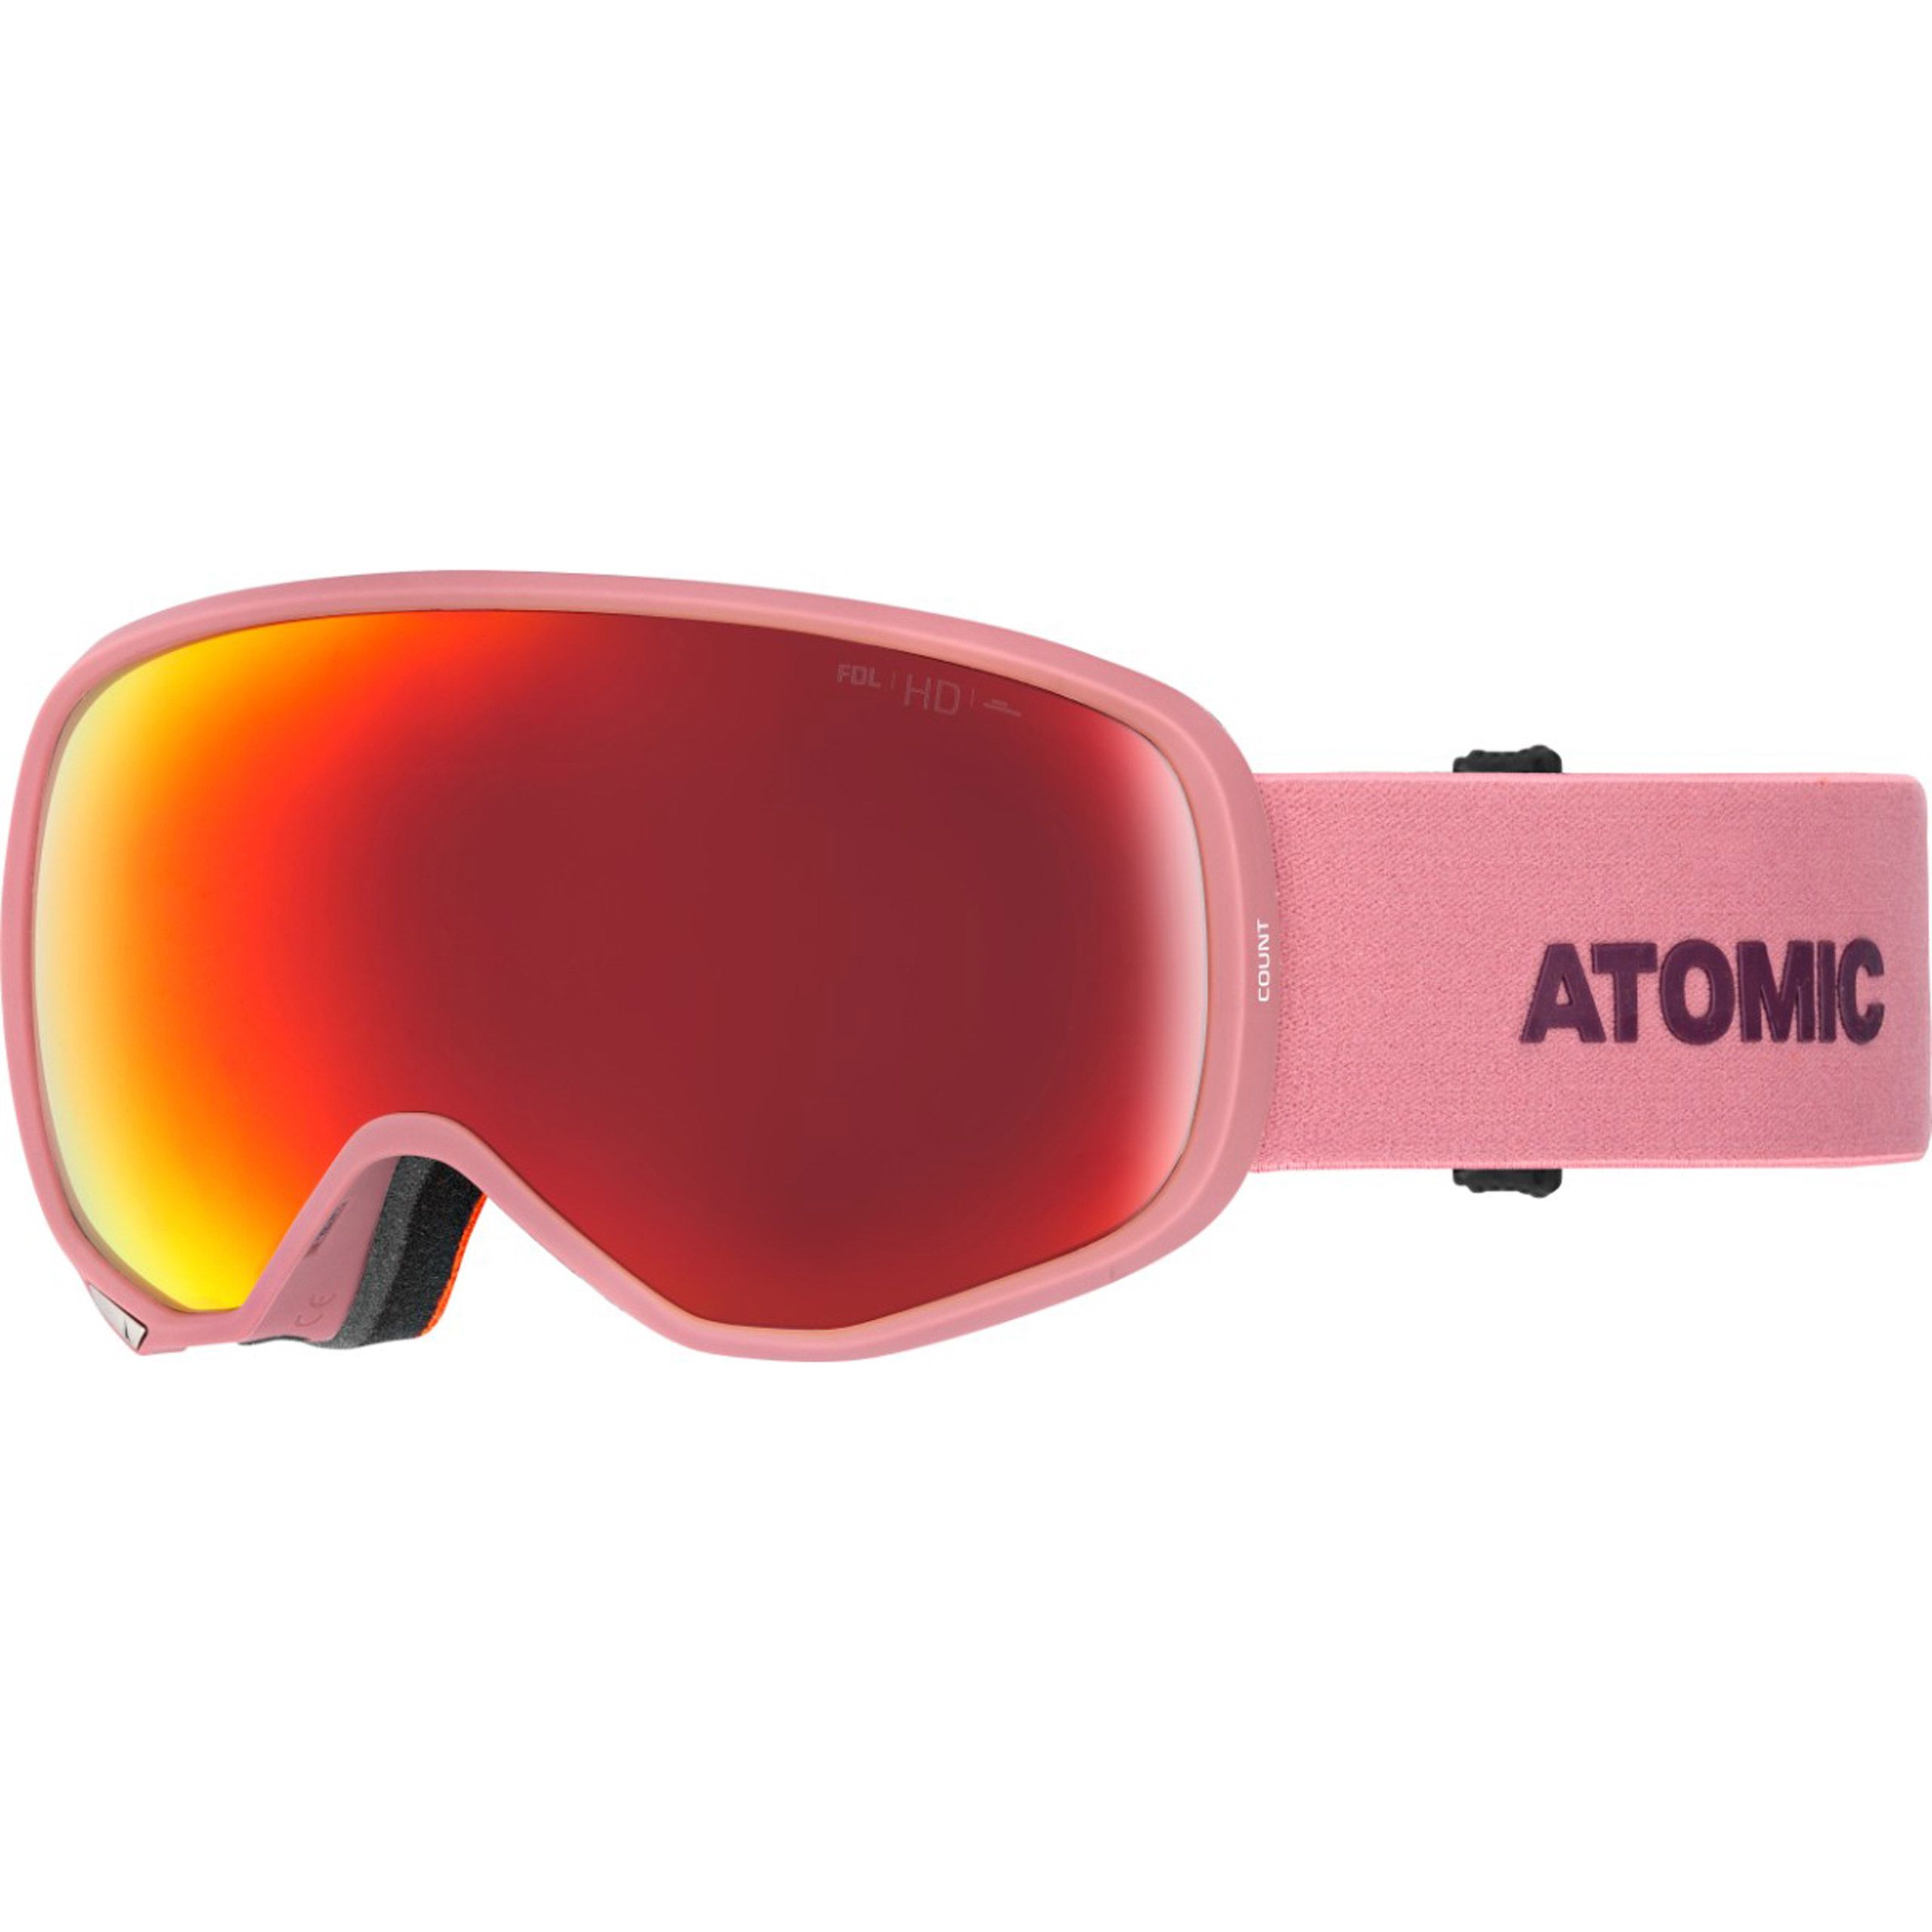 Atomic Womens Count 360 Degree Hd Ski Goggles